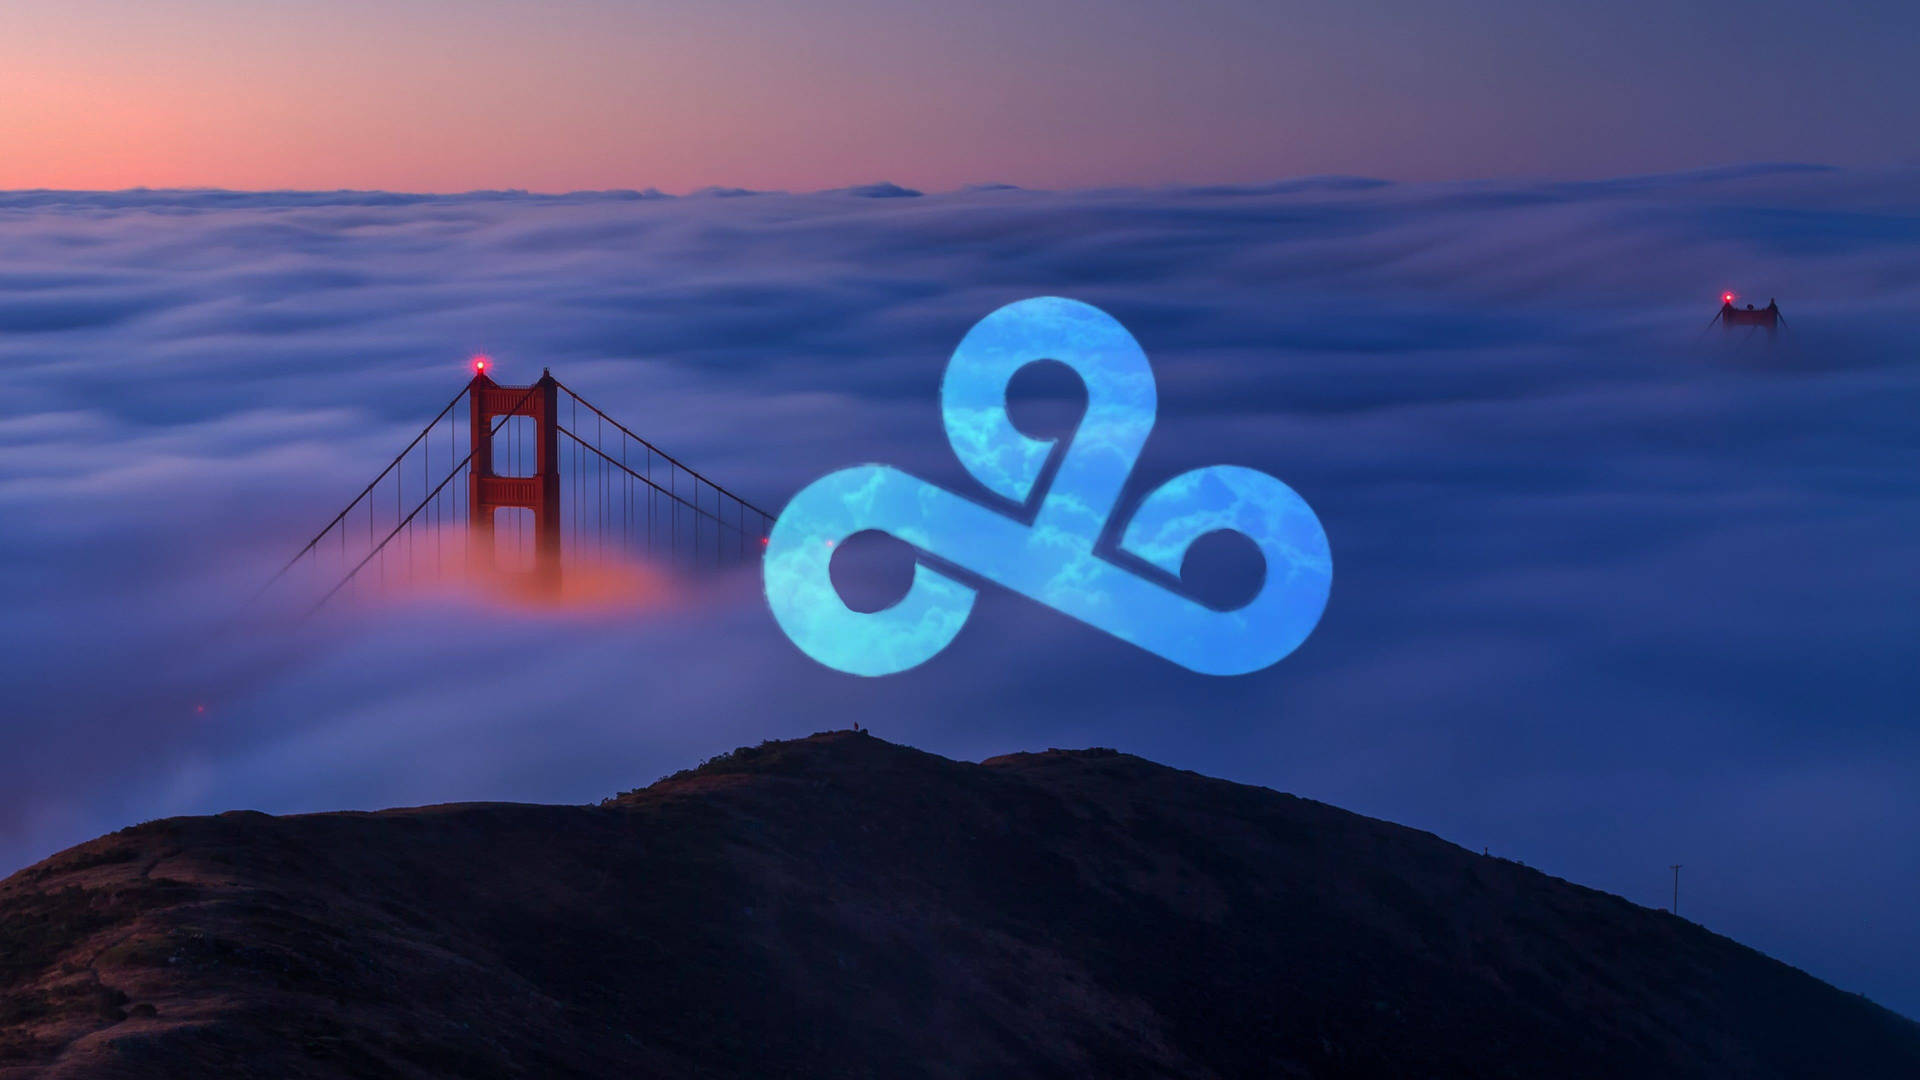 Cloud9 Golden Gate Bridge Cloud Logo Wallpaper